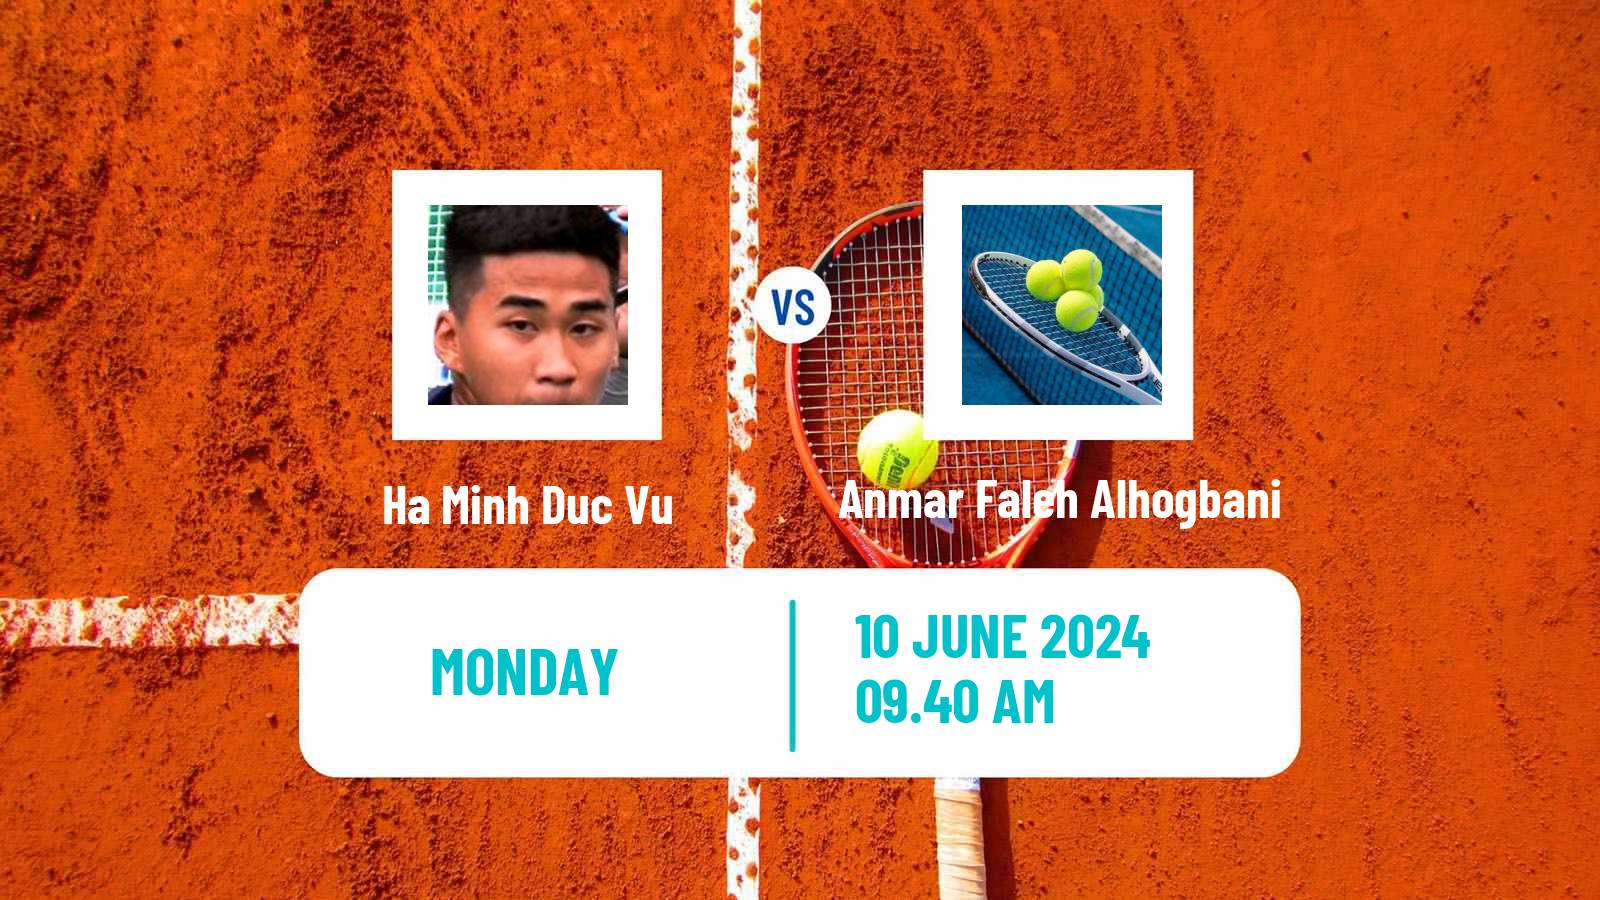 Tennis Davis Cup Group III Ha Minh Duc Vu - Anmar Faleh Alhogbani